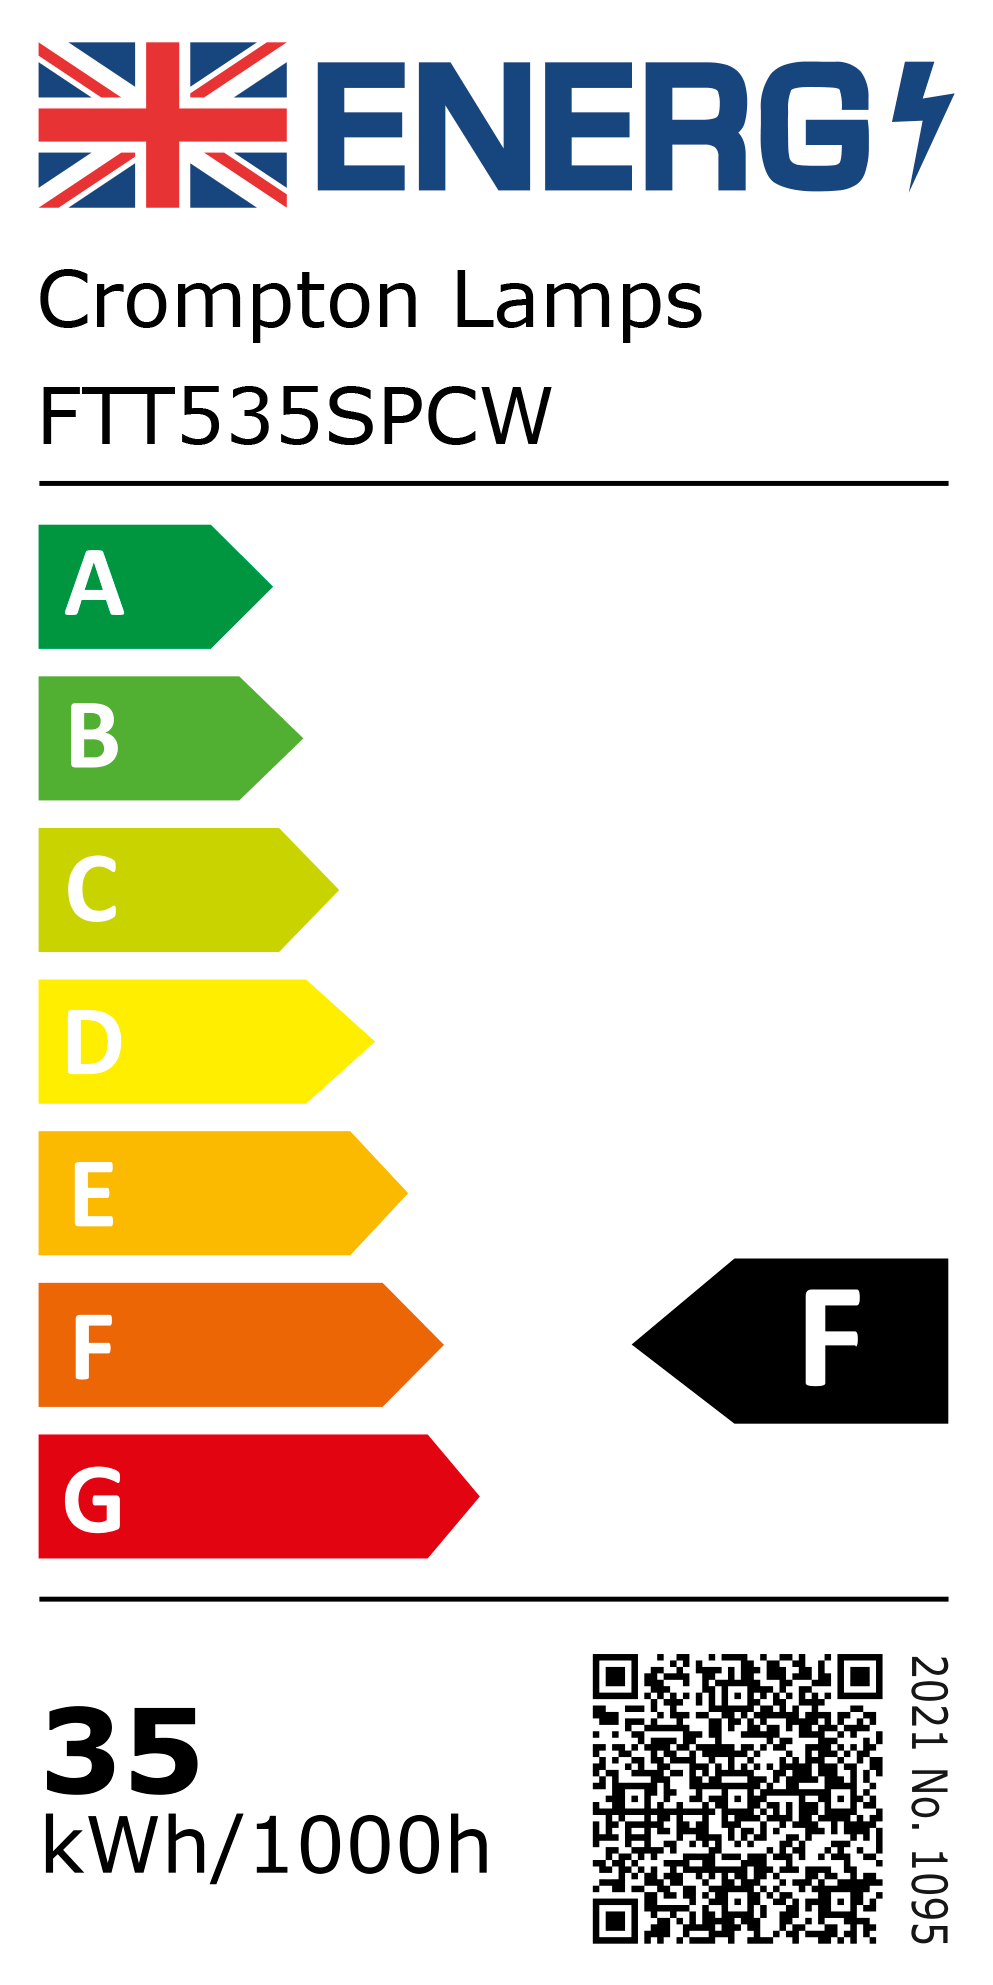 New 2021 Energy Rating Label: Stock Code FTT535SPCW